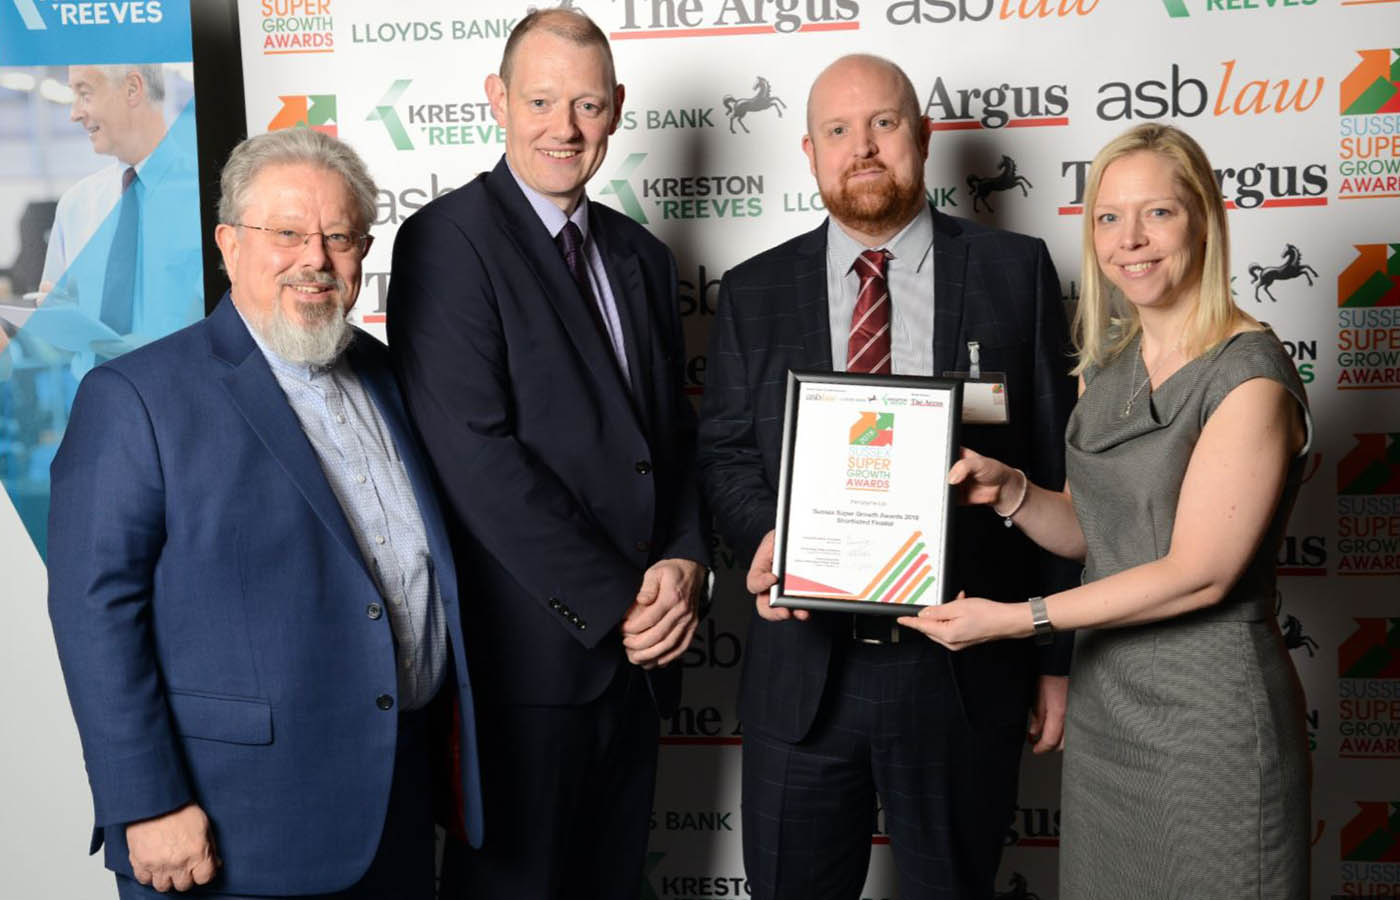 Ferrabyrne Ltd Finalist for Sussex Super Growth Awards